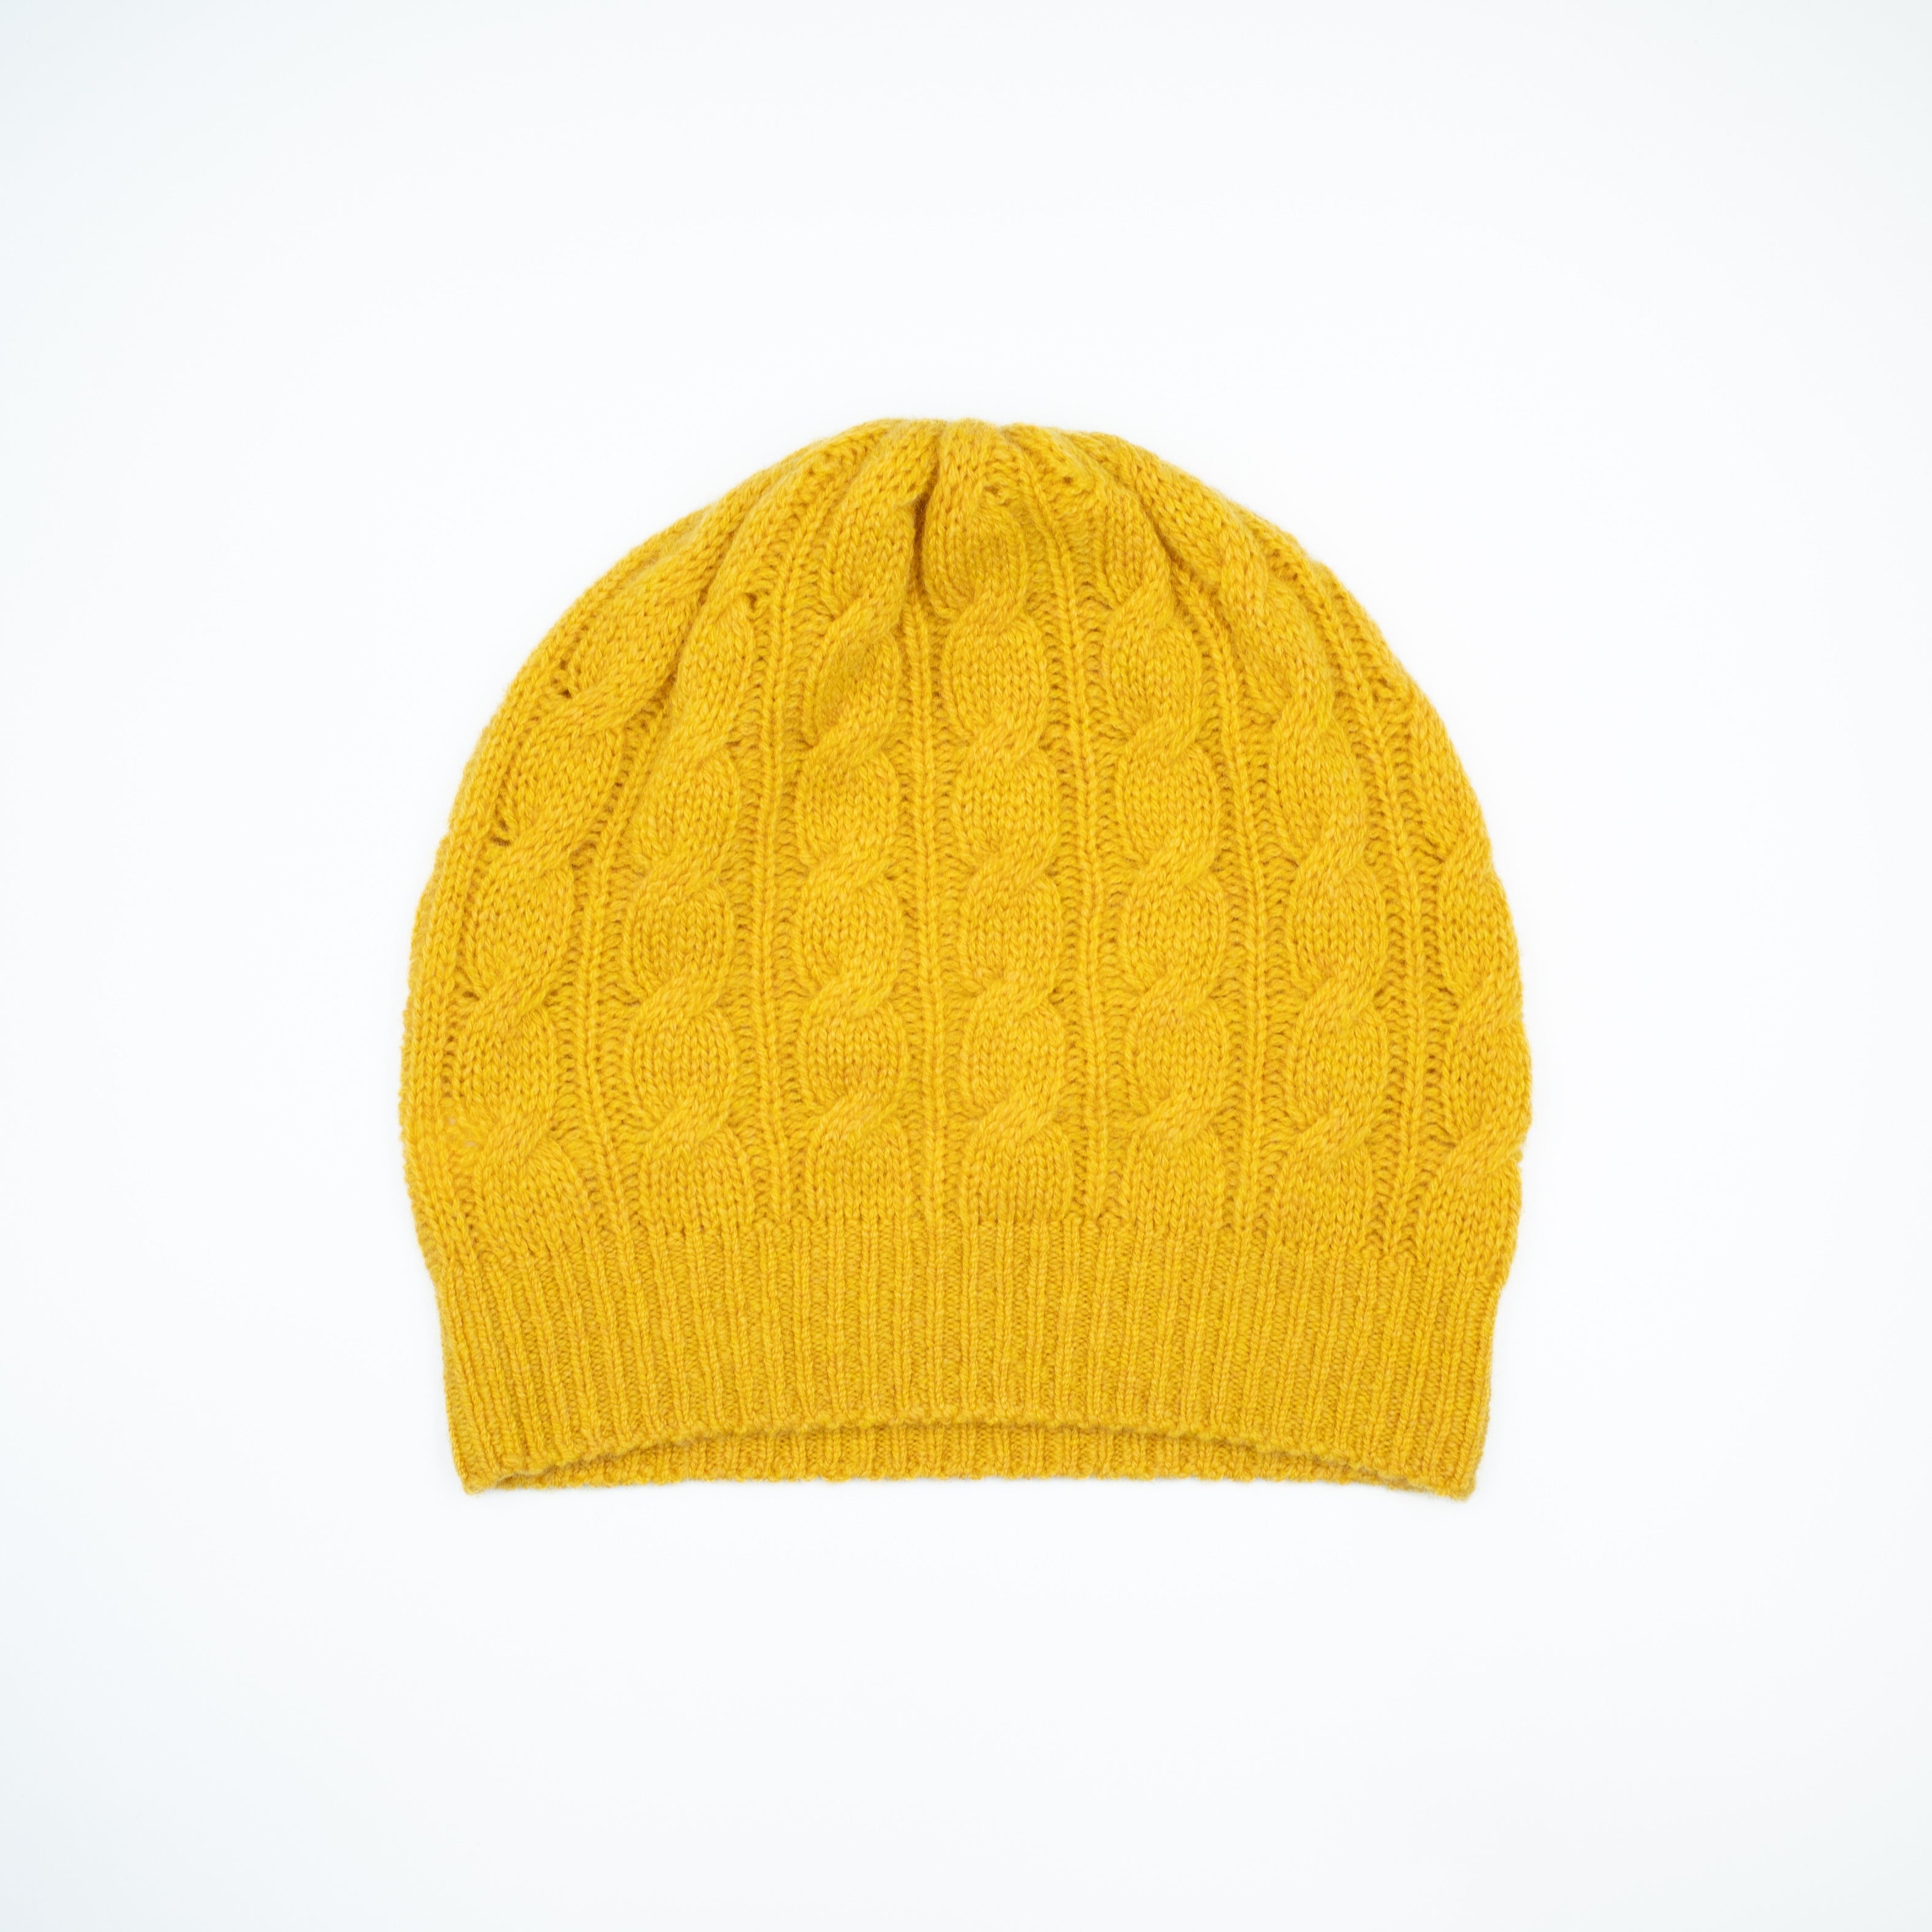 Brand New Scottish Mustard Yellow Cable Knit Beanie Hat Unisex